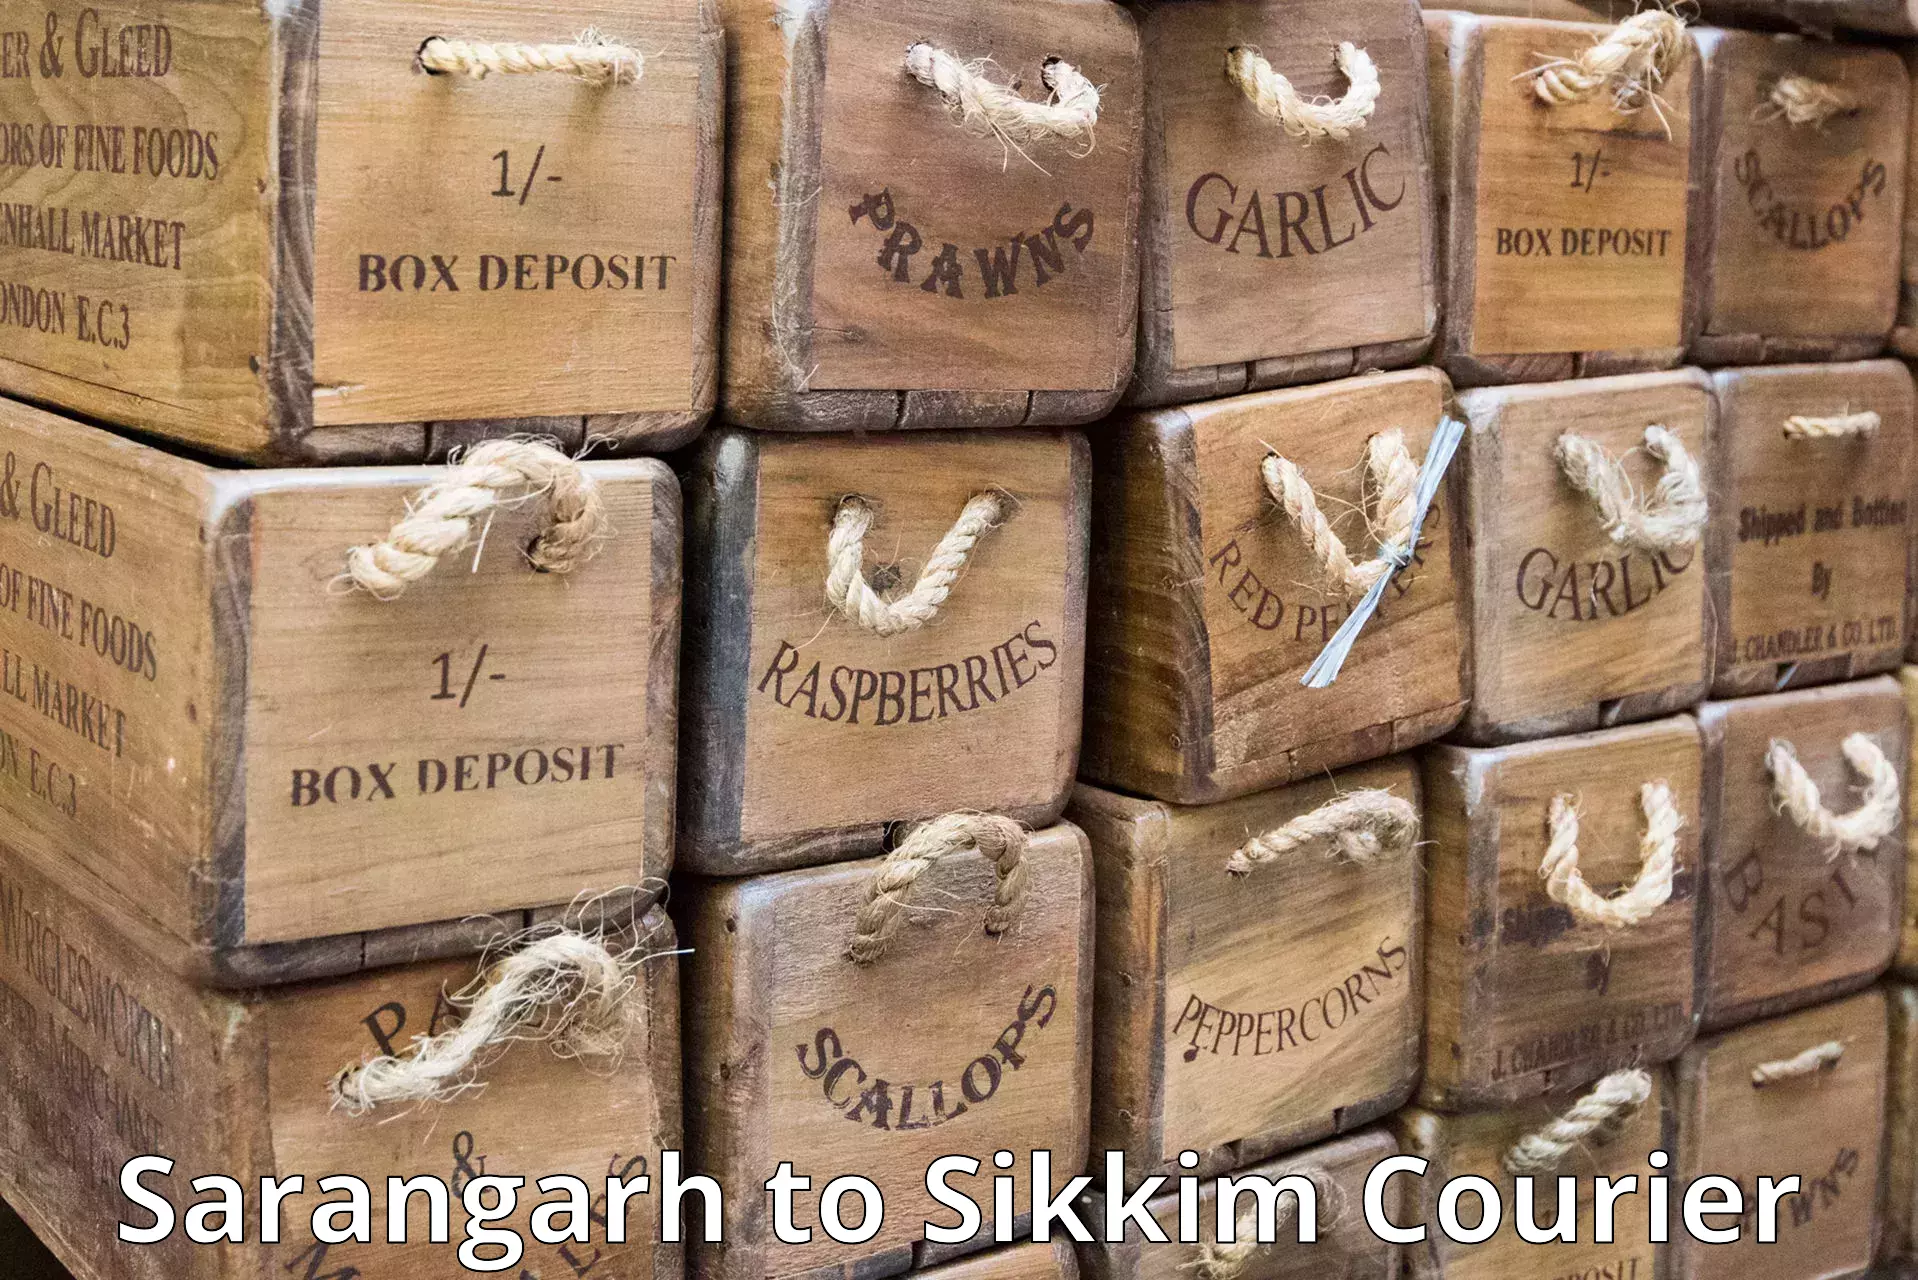 Courier app Sarangarh to Gangtok